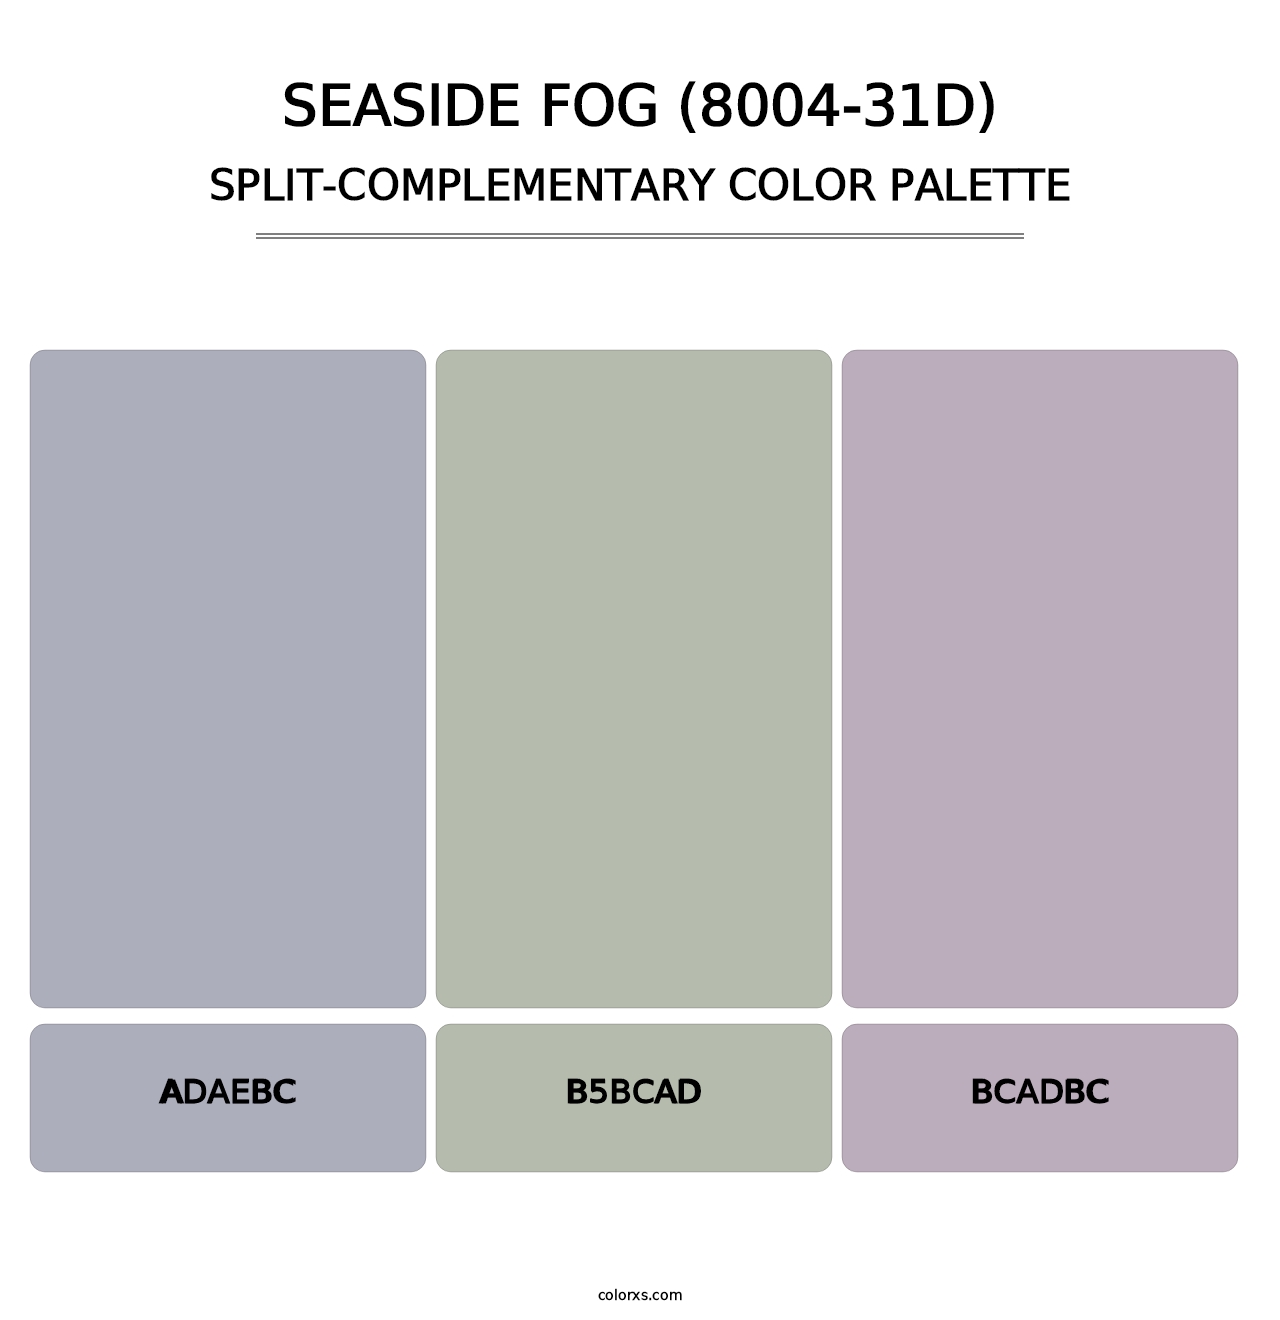 Seaside Fog (8004-31D) - Split-Complementary Color Palette